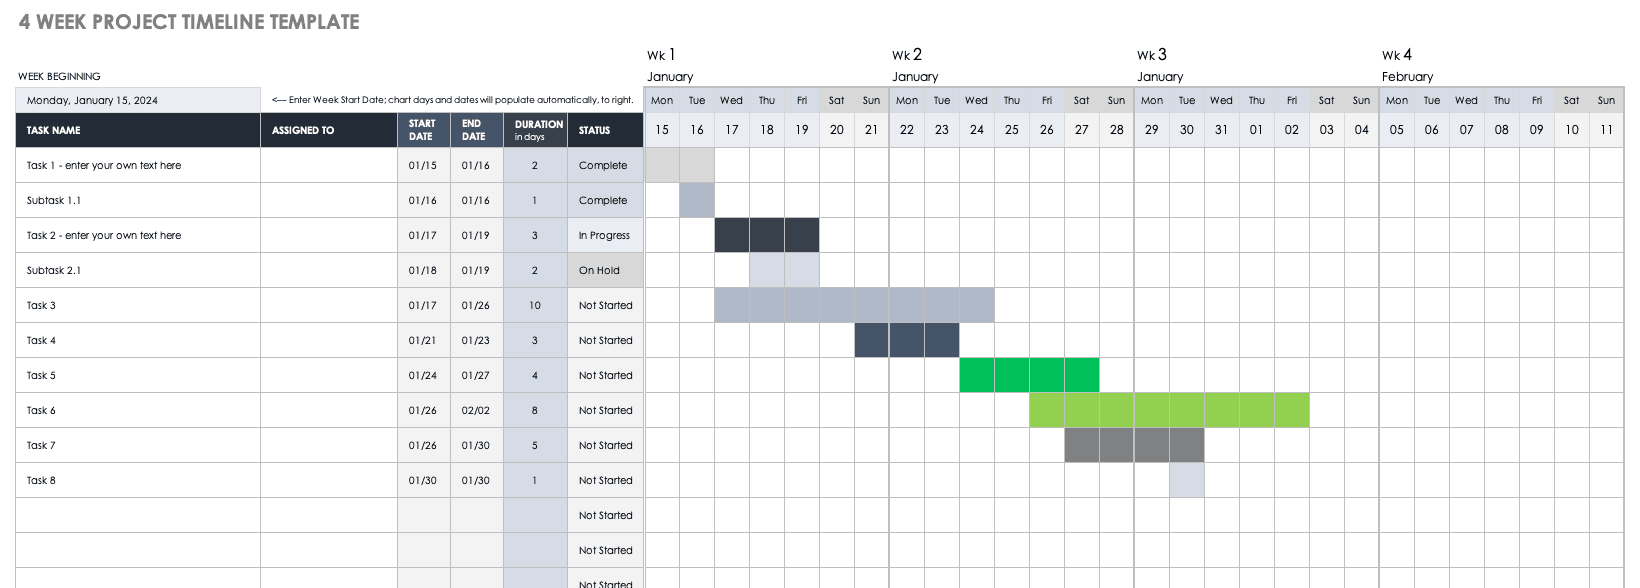 4 Week Project Timeline Template